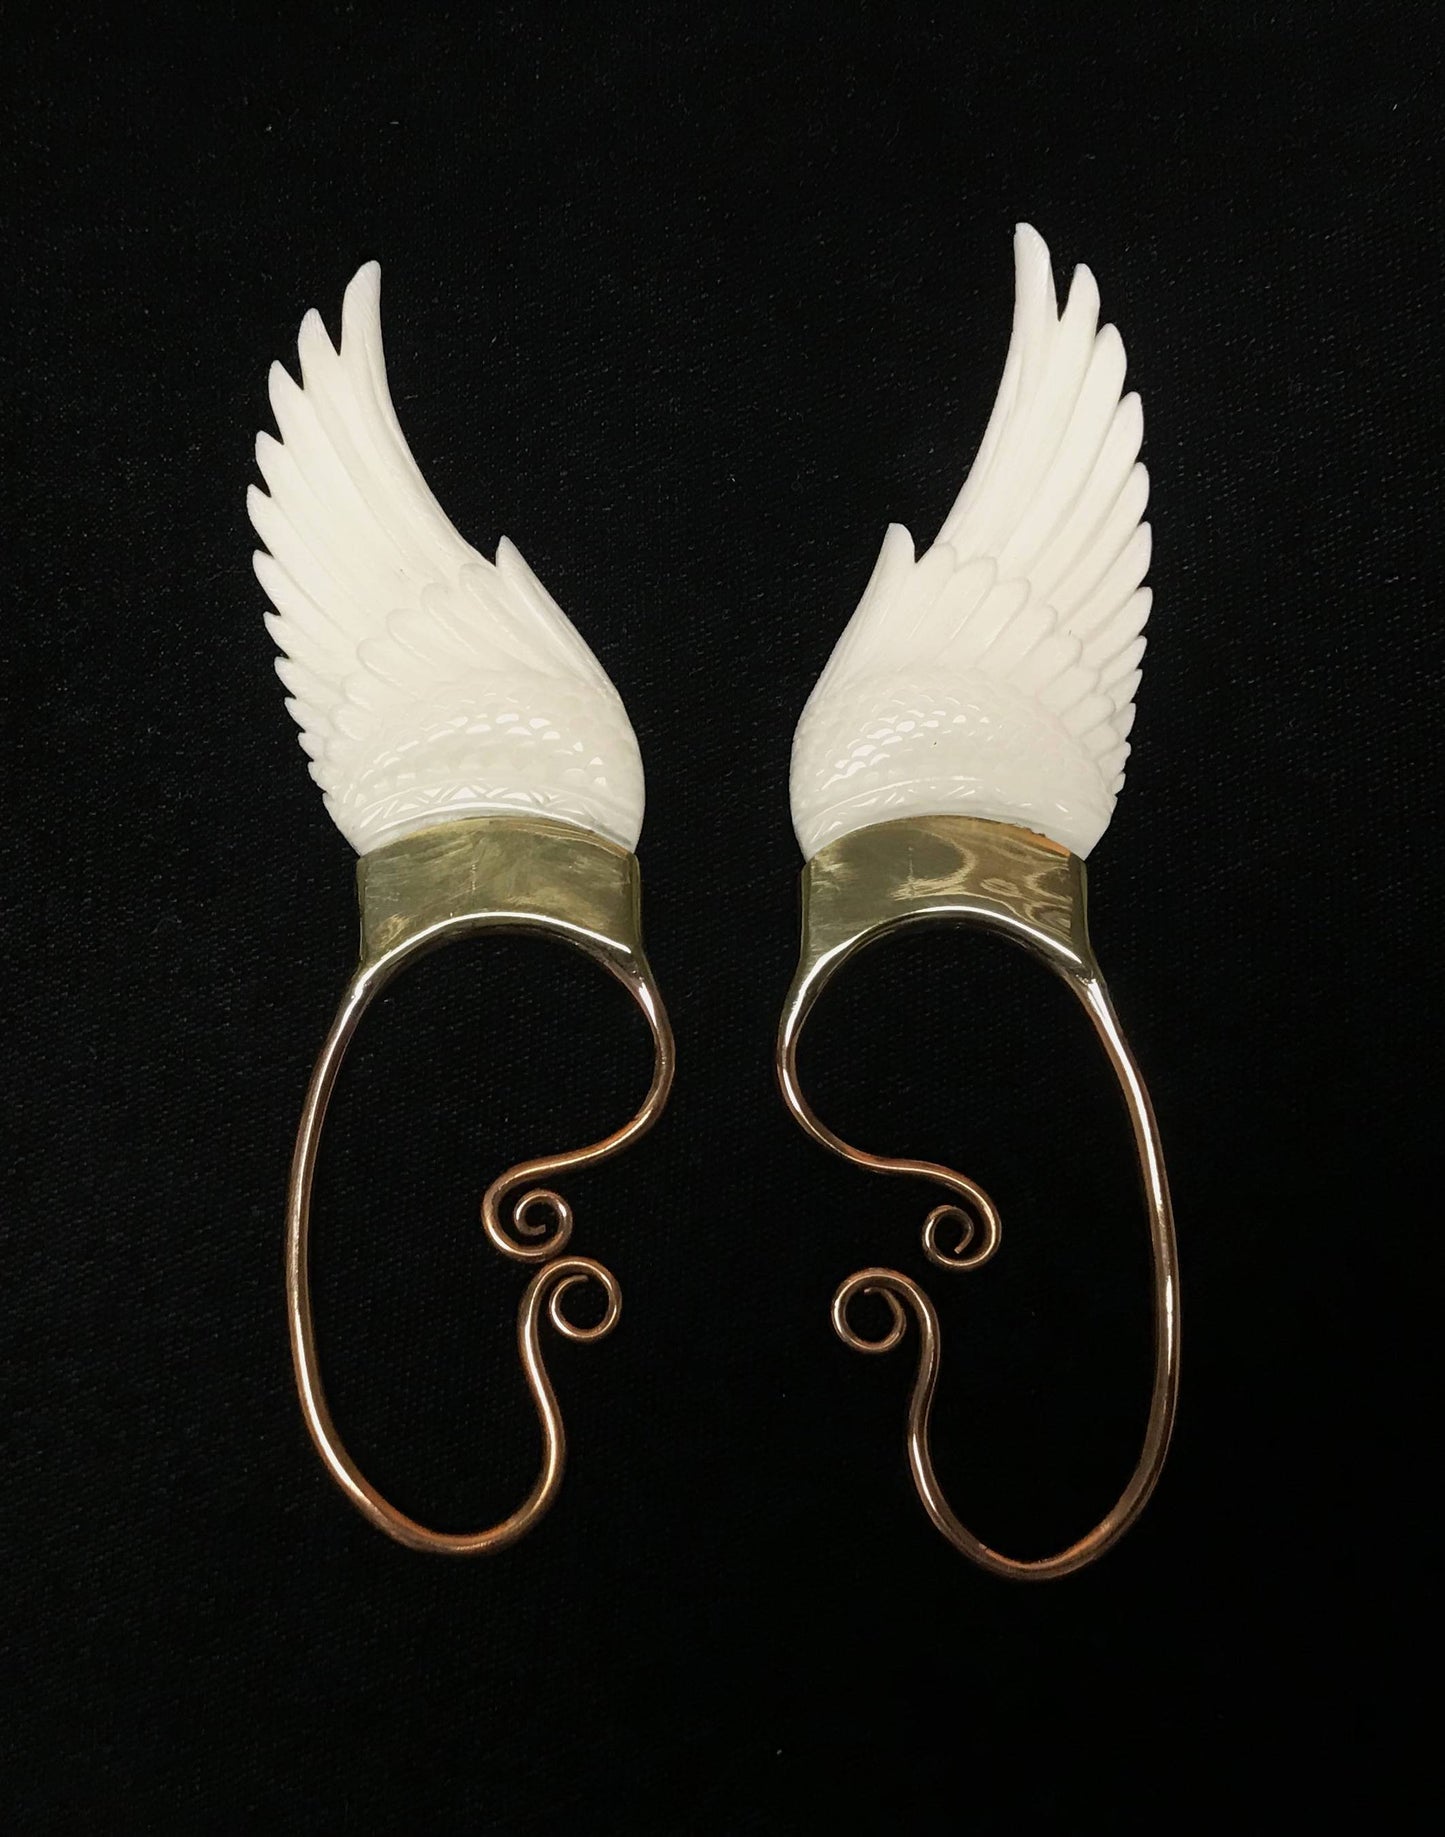 Wing Ear Cuffs - Bone